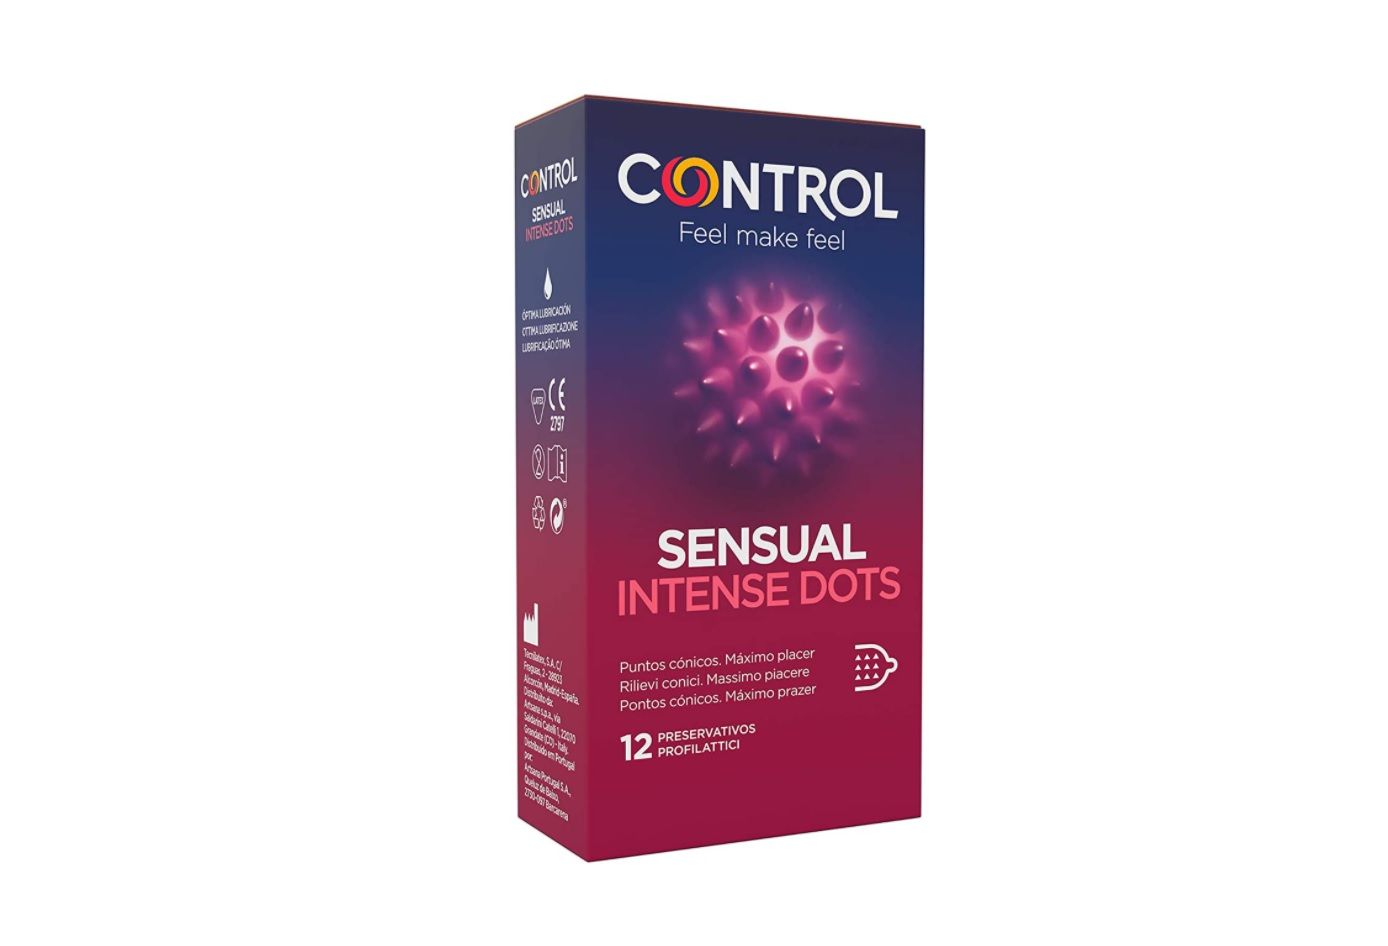 12 preservativos Control Sensual Intense Dots (compra recurrente)